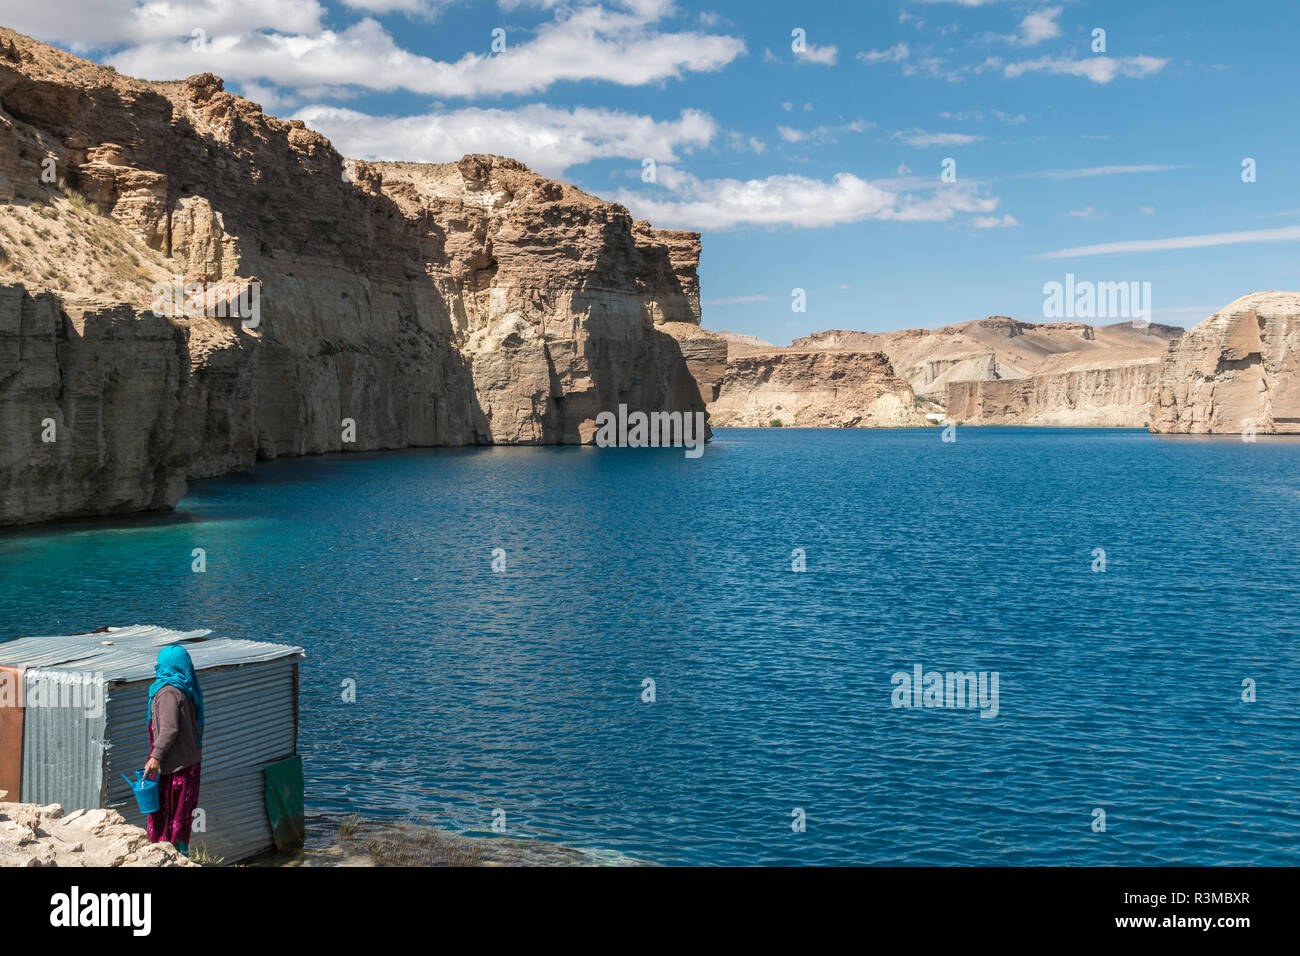 Lake Band-e-Amir, Afghanistan Stock Photo